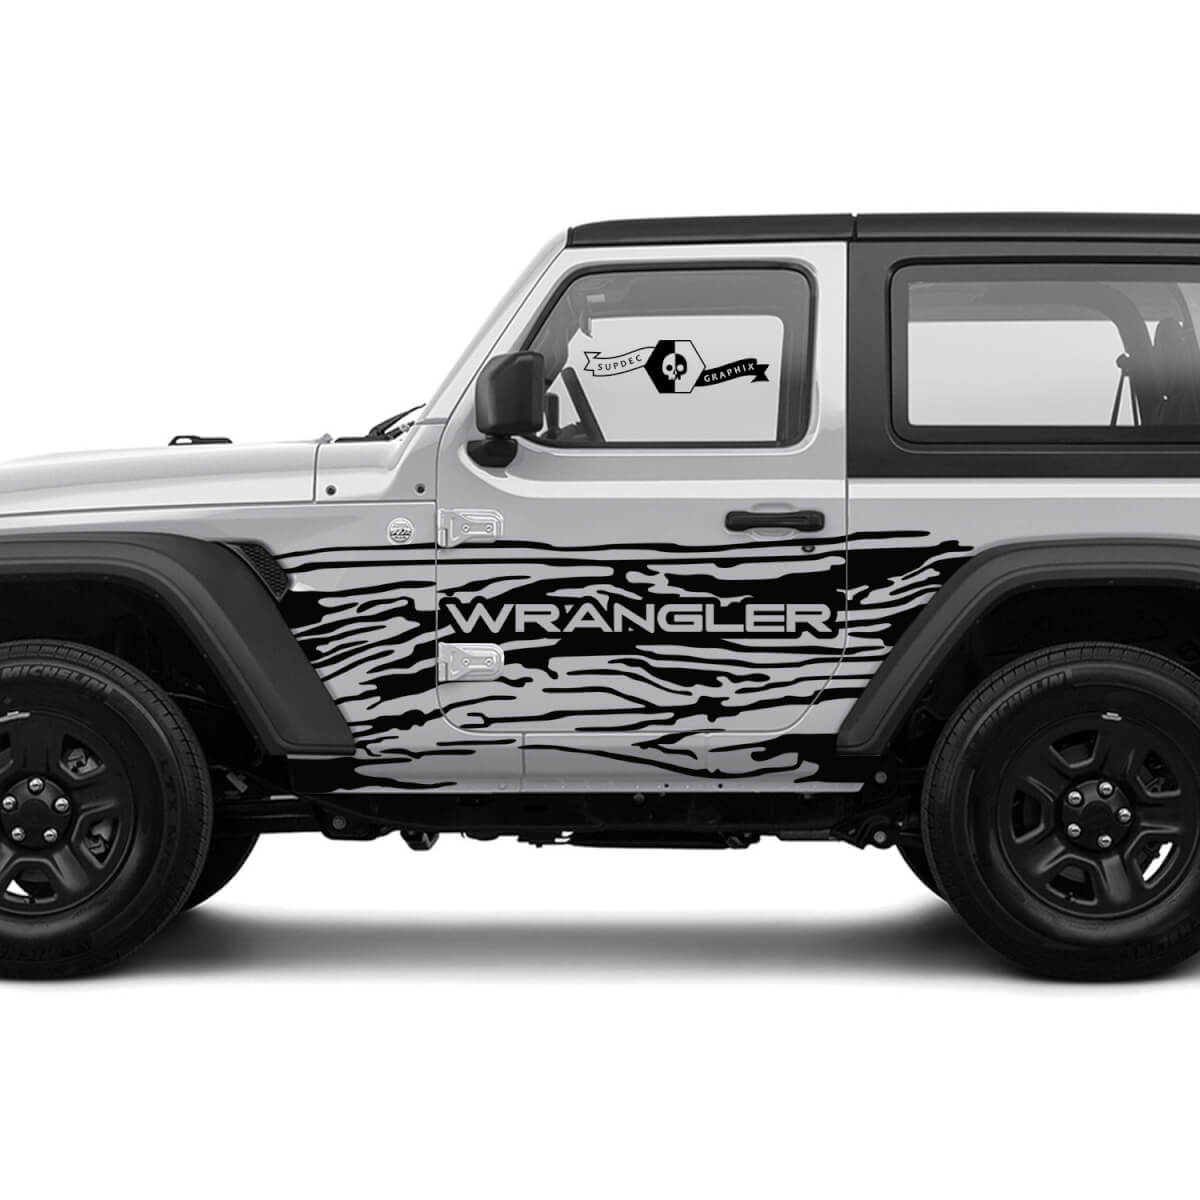 2 New Jeep Wrangler Unlimited 4 Türstätte Aufkleber 4x4 Off-Raod Splash Mud Mountains Seitengrafikaufkleber Aufkleber